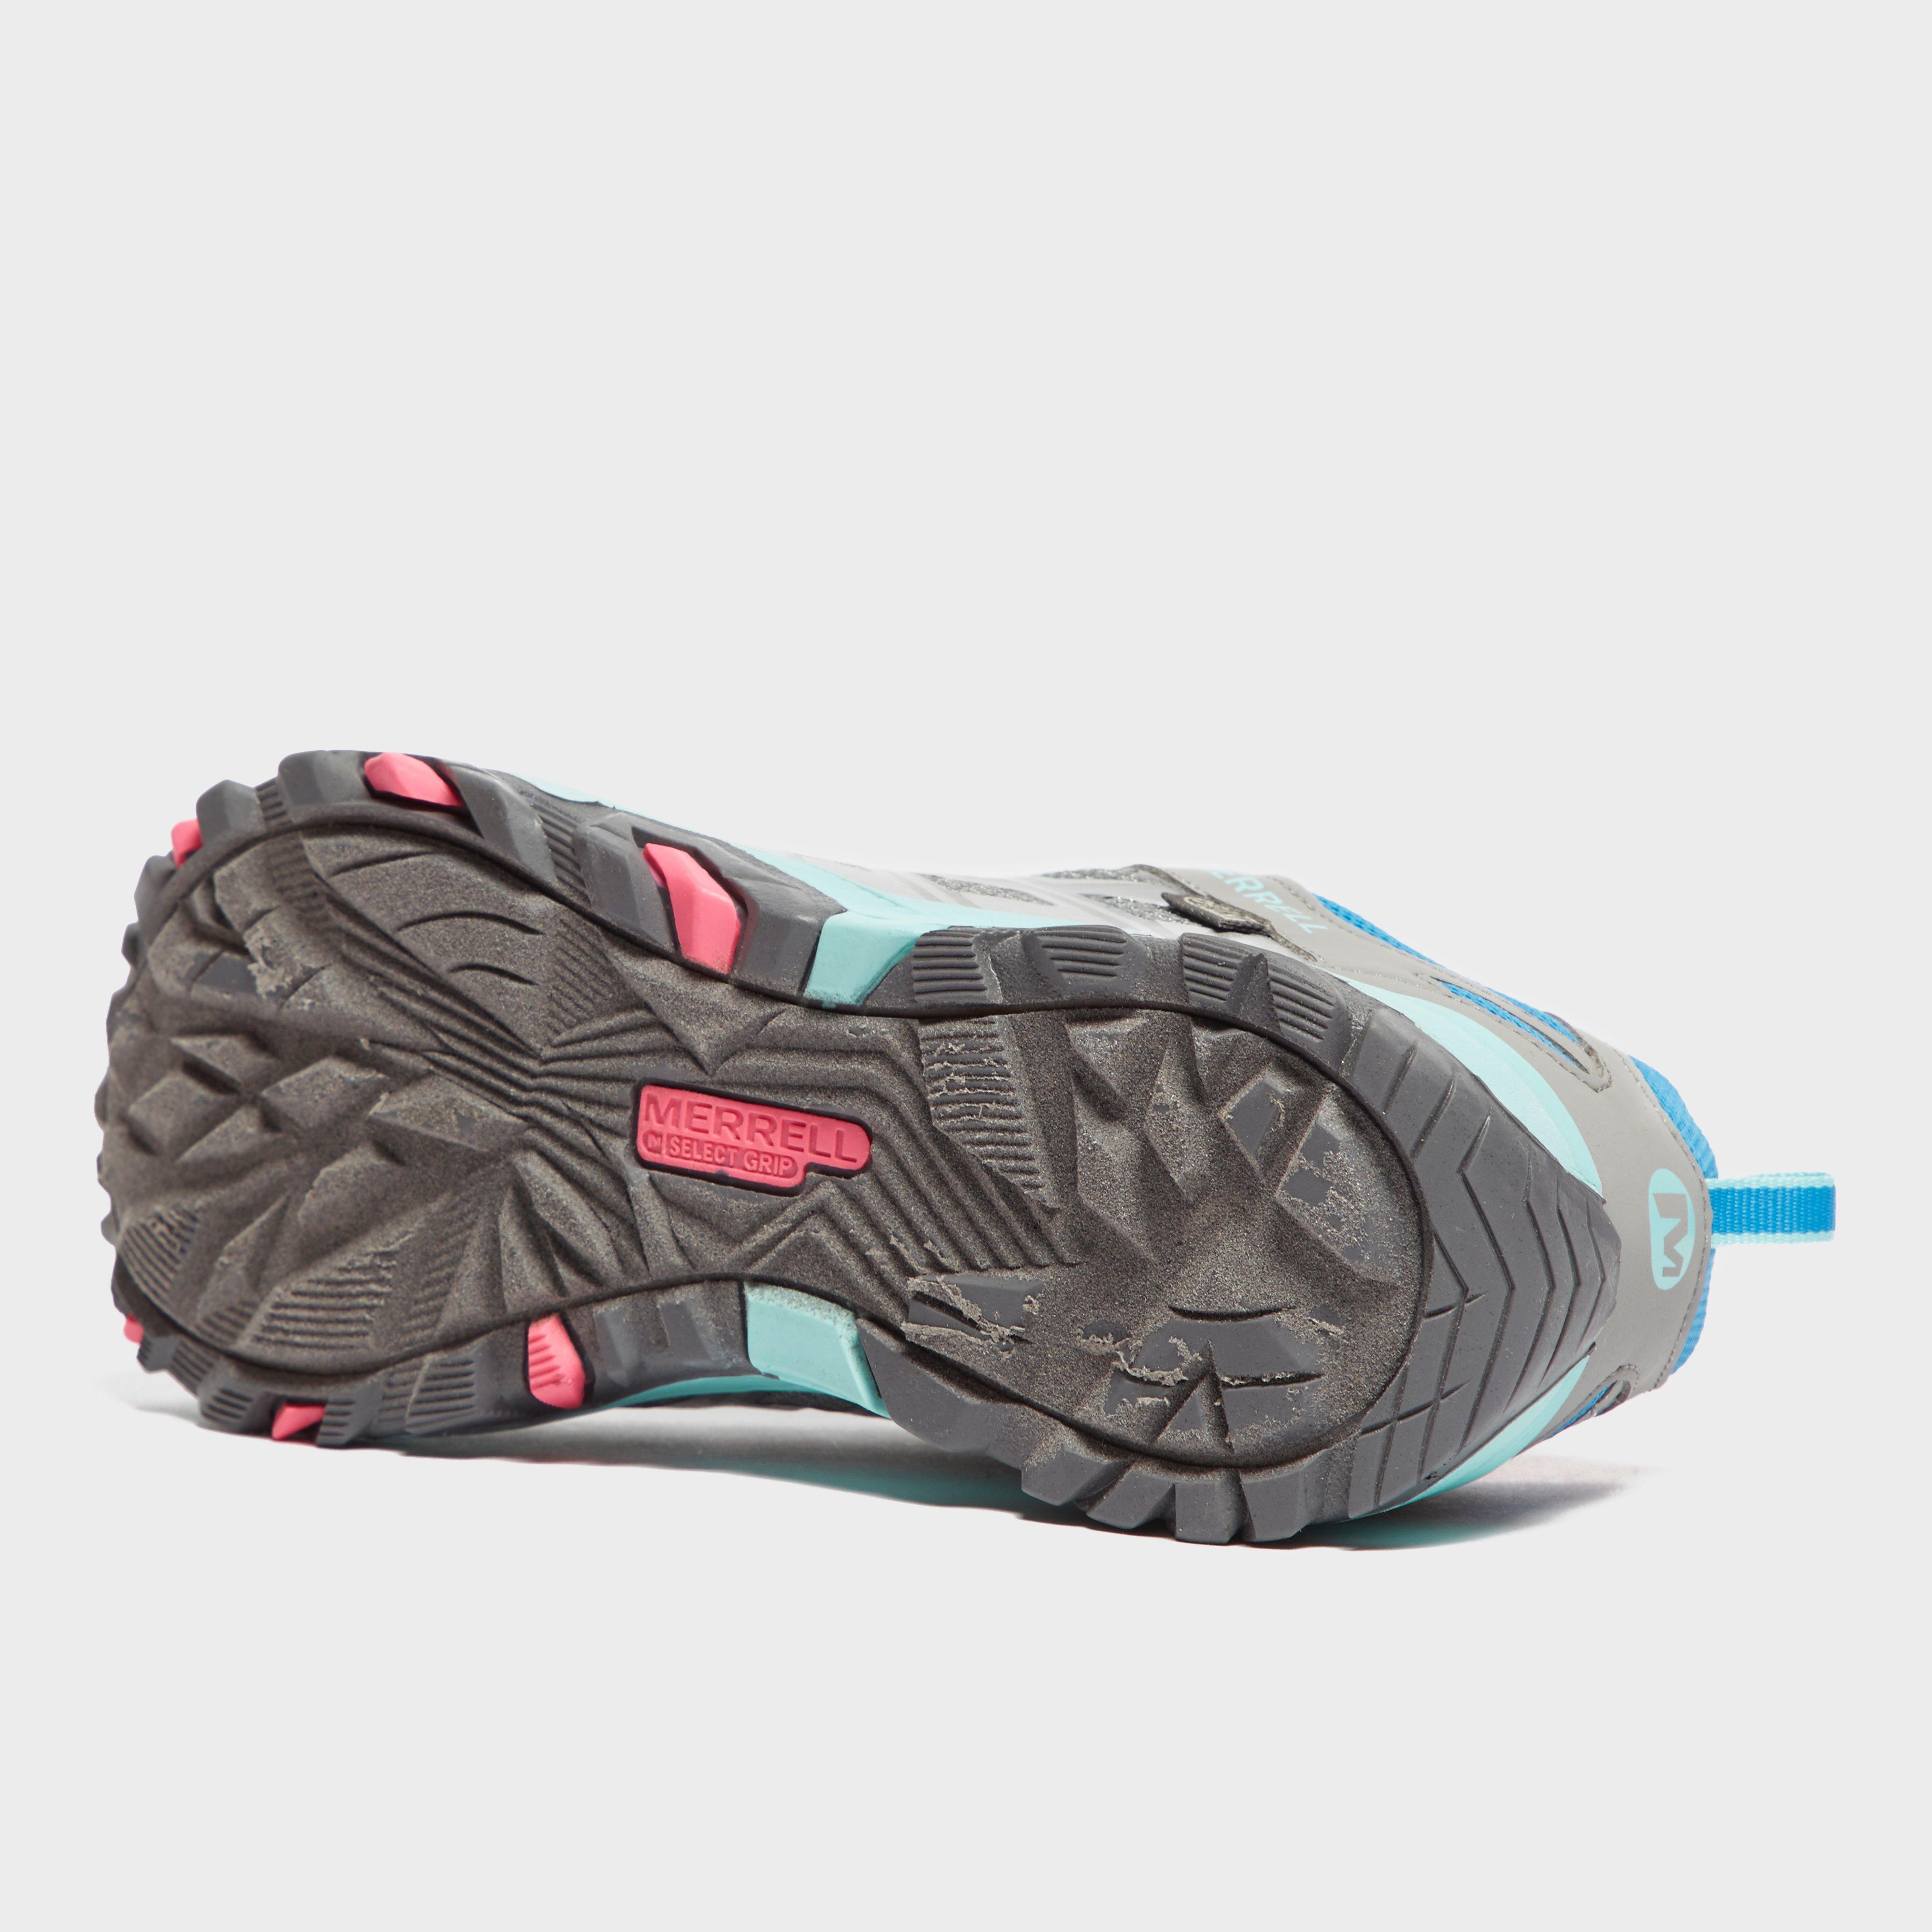 Merrell Kids’ MOAB FST Low Waterproof Shoes Review